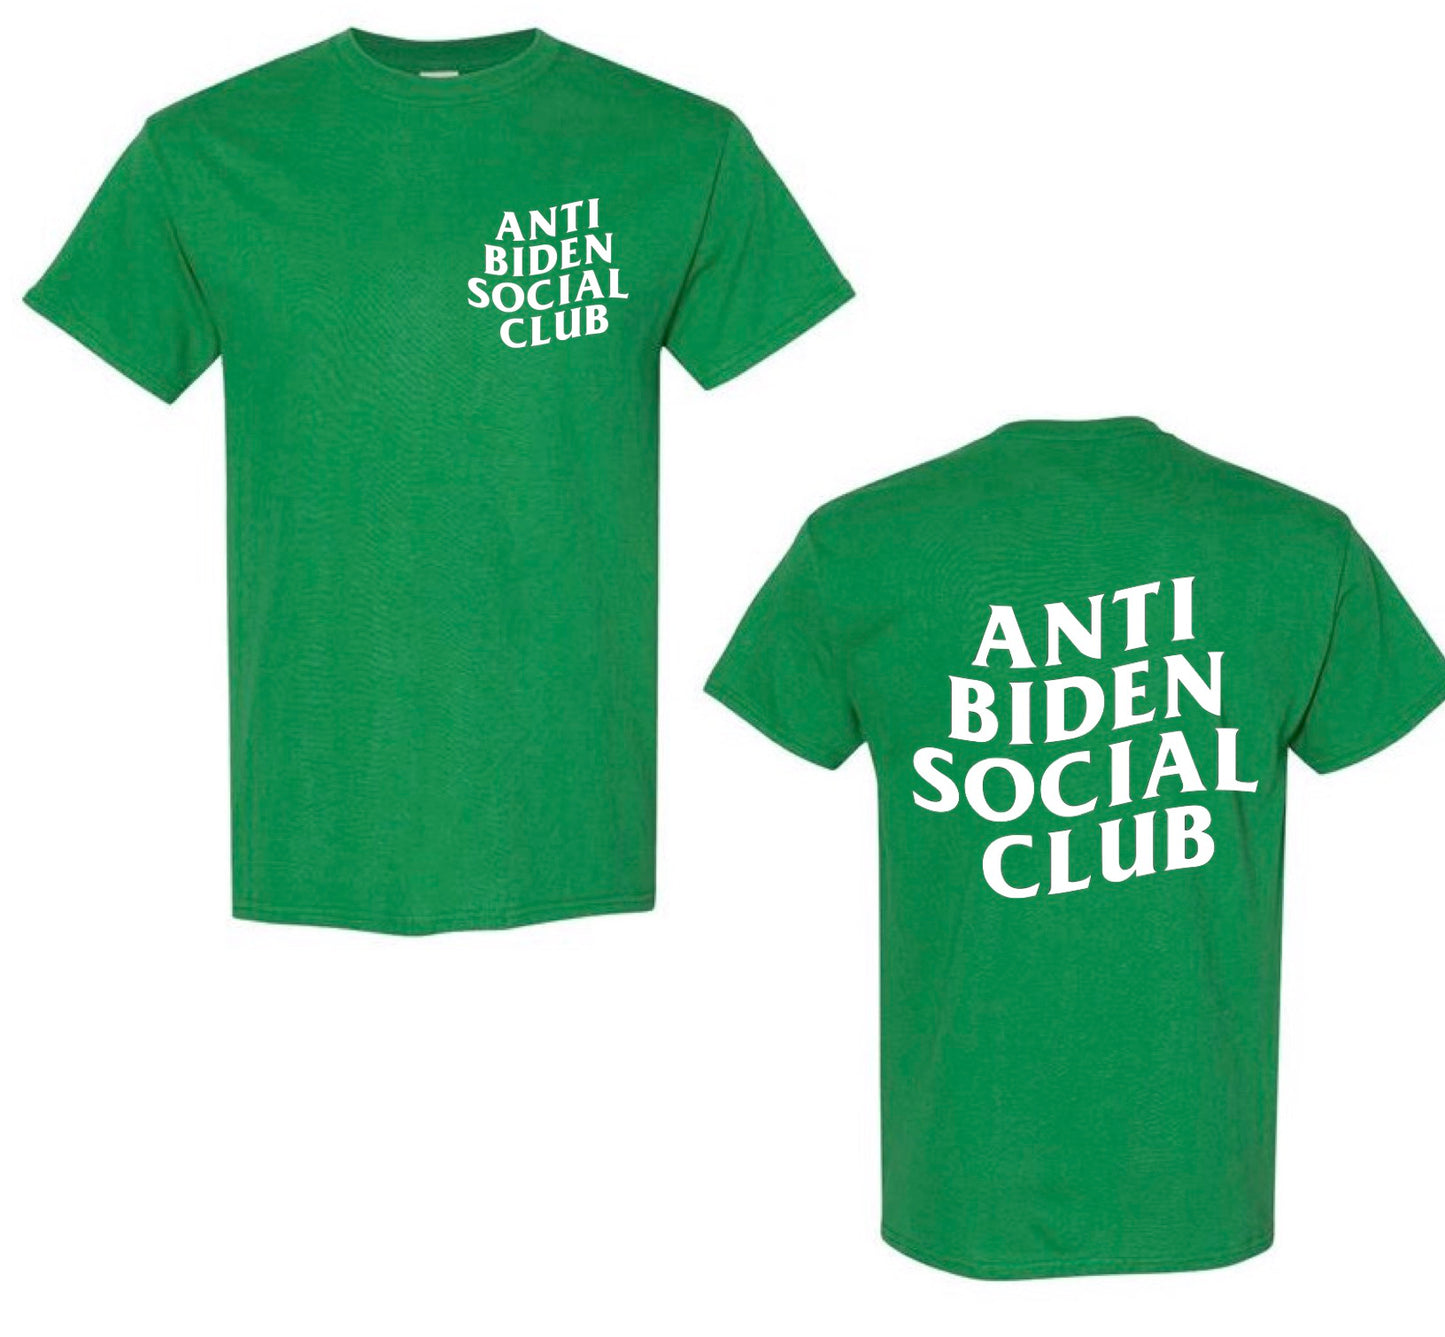 Anti-Biden Social Club, St. Patty's Special Edition (FREE Shipping)